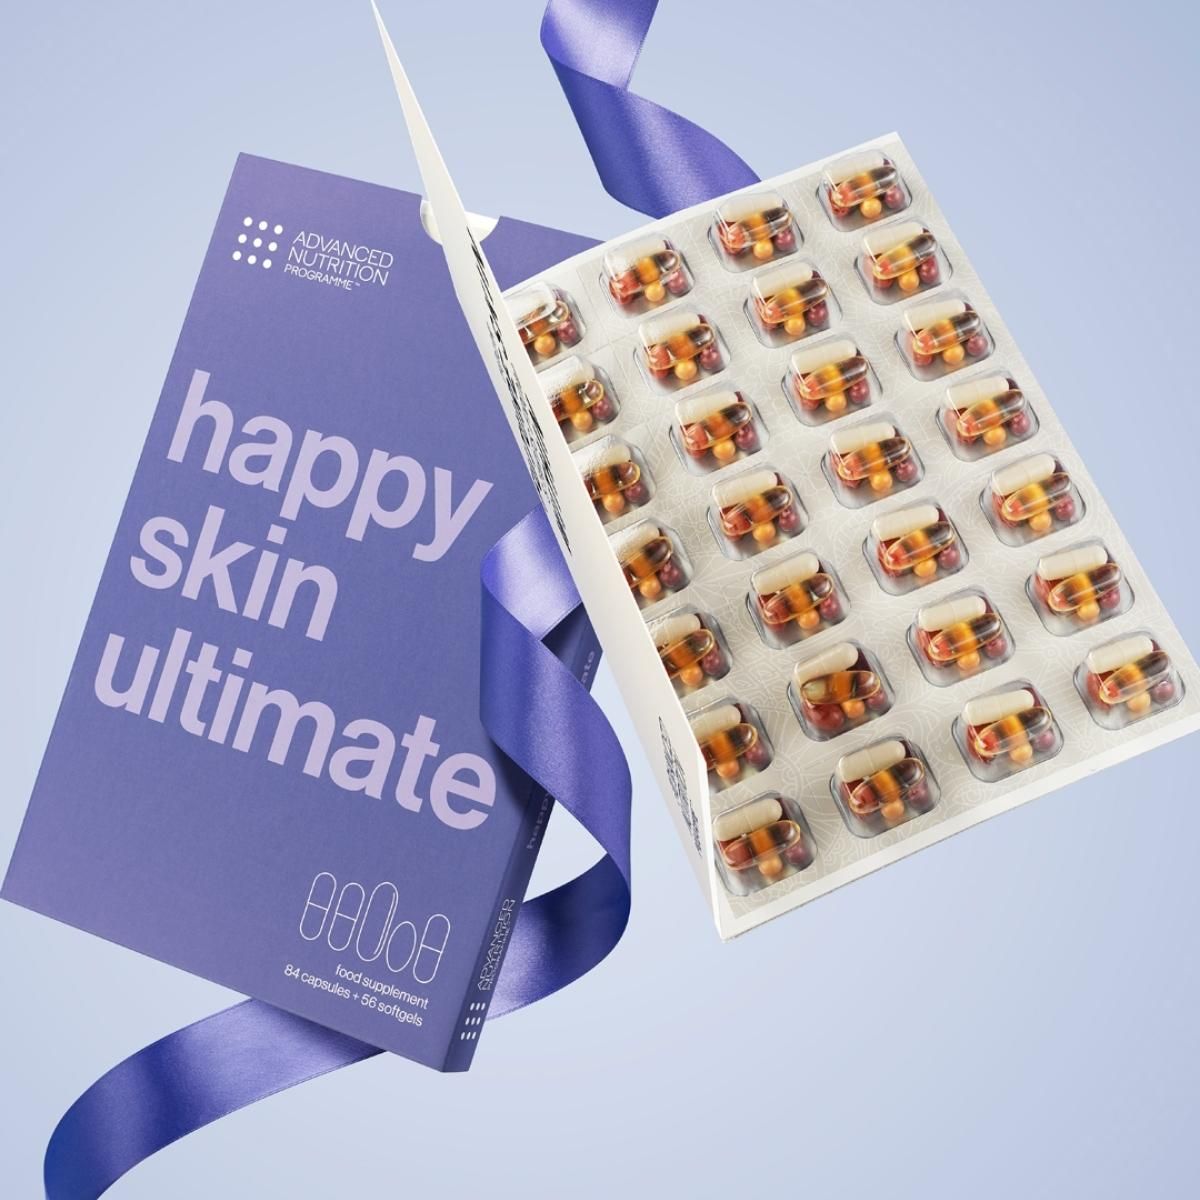 Advanced Nutrition Programme | Happy Ultimate Skin - DG International Ventures Limited